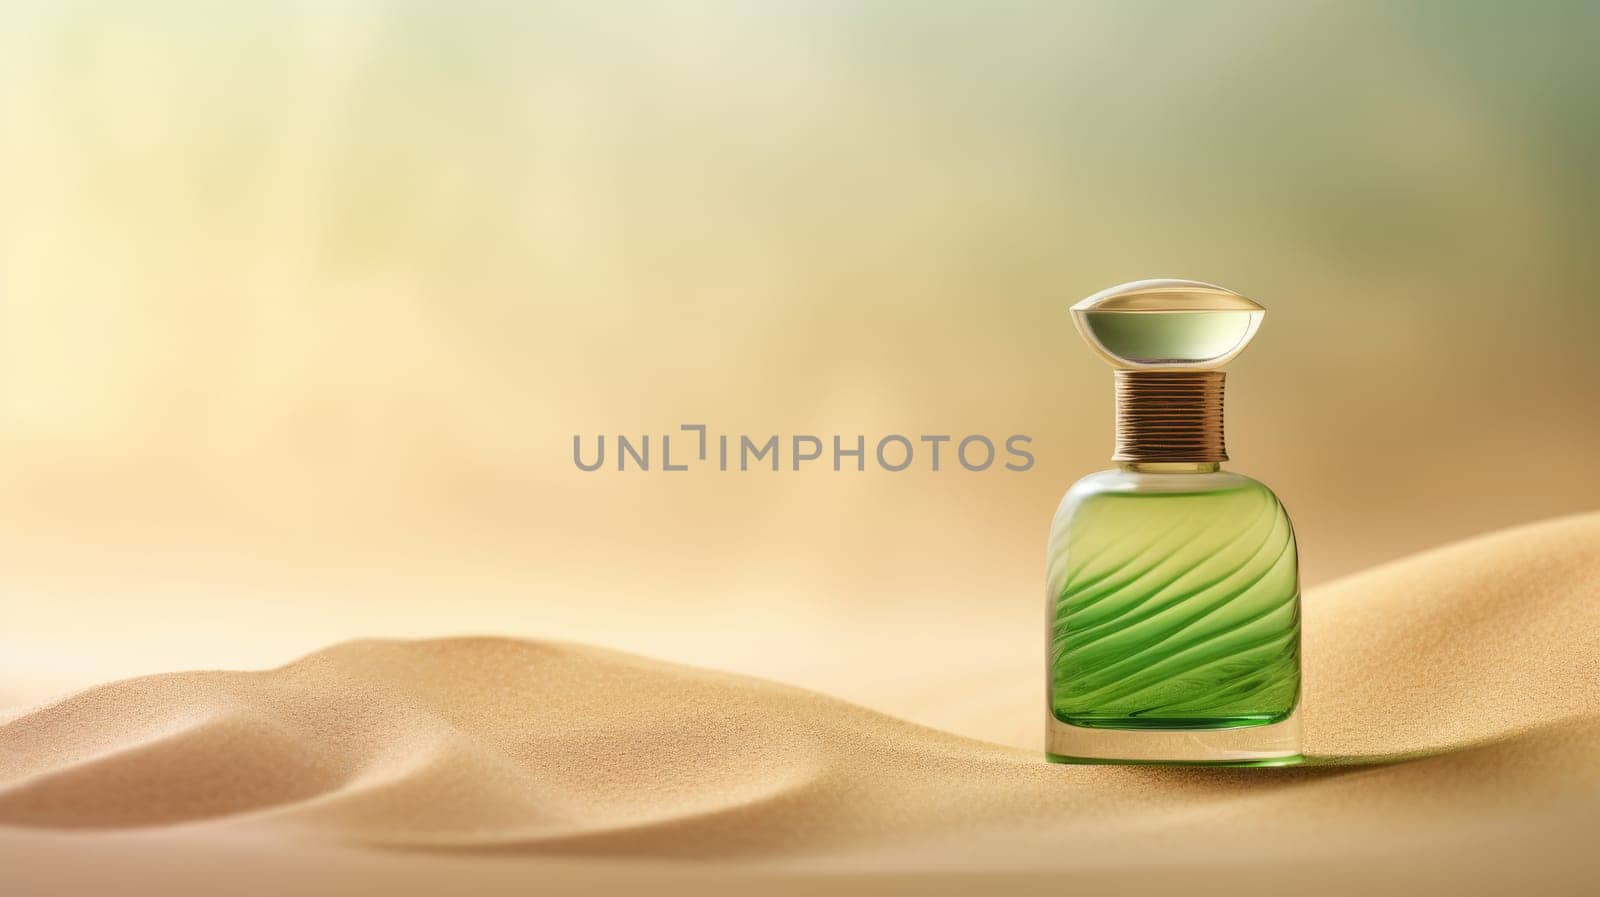 Transparent green glass perfume bottle mockup with sandy background. Eau de toilette. Mockup, spring flat lay. by JuliaDorian